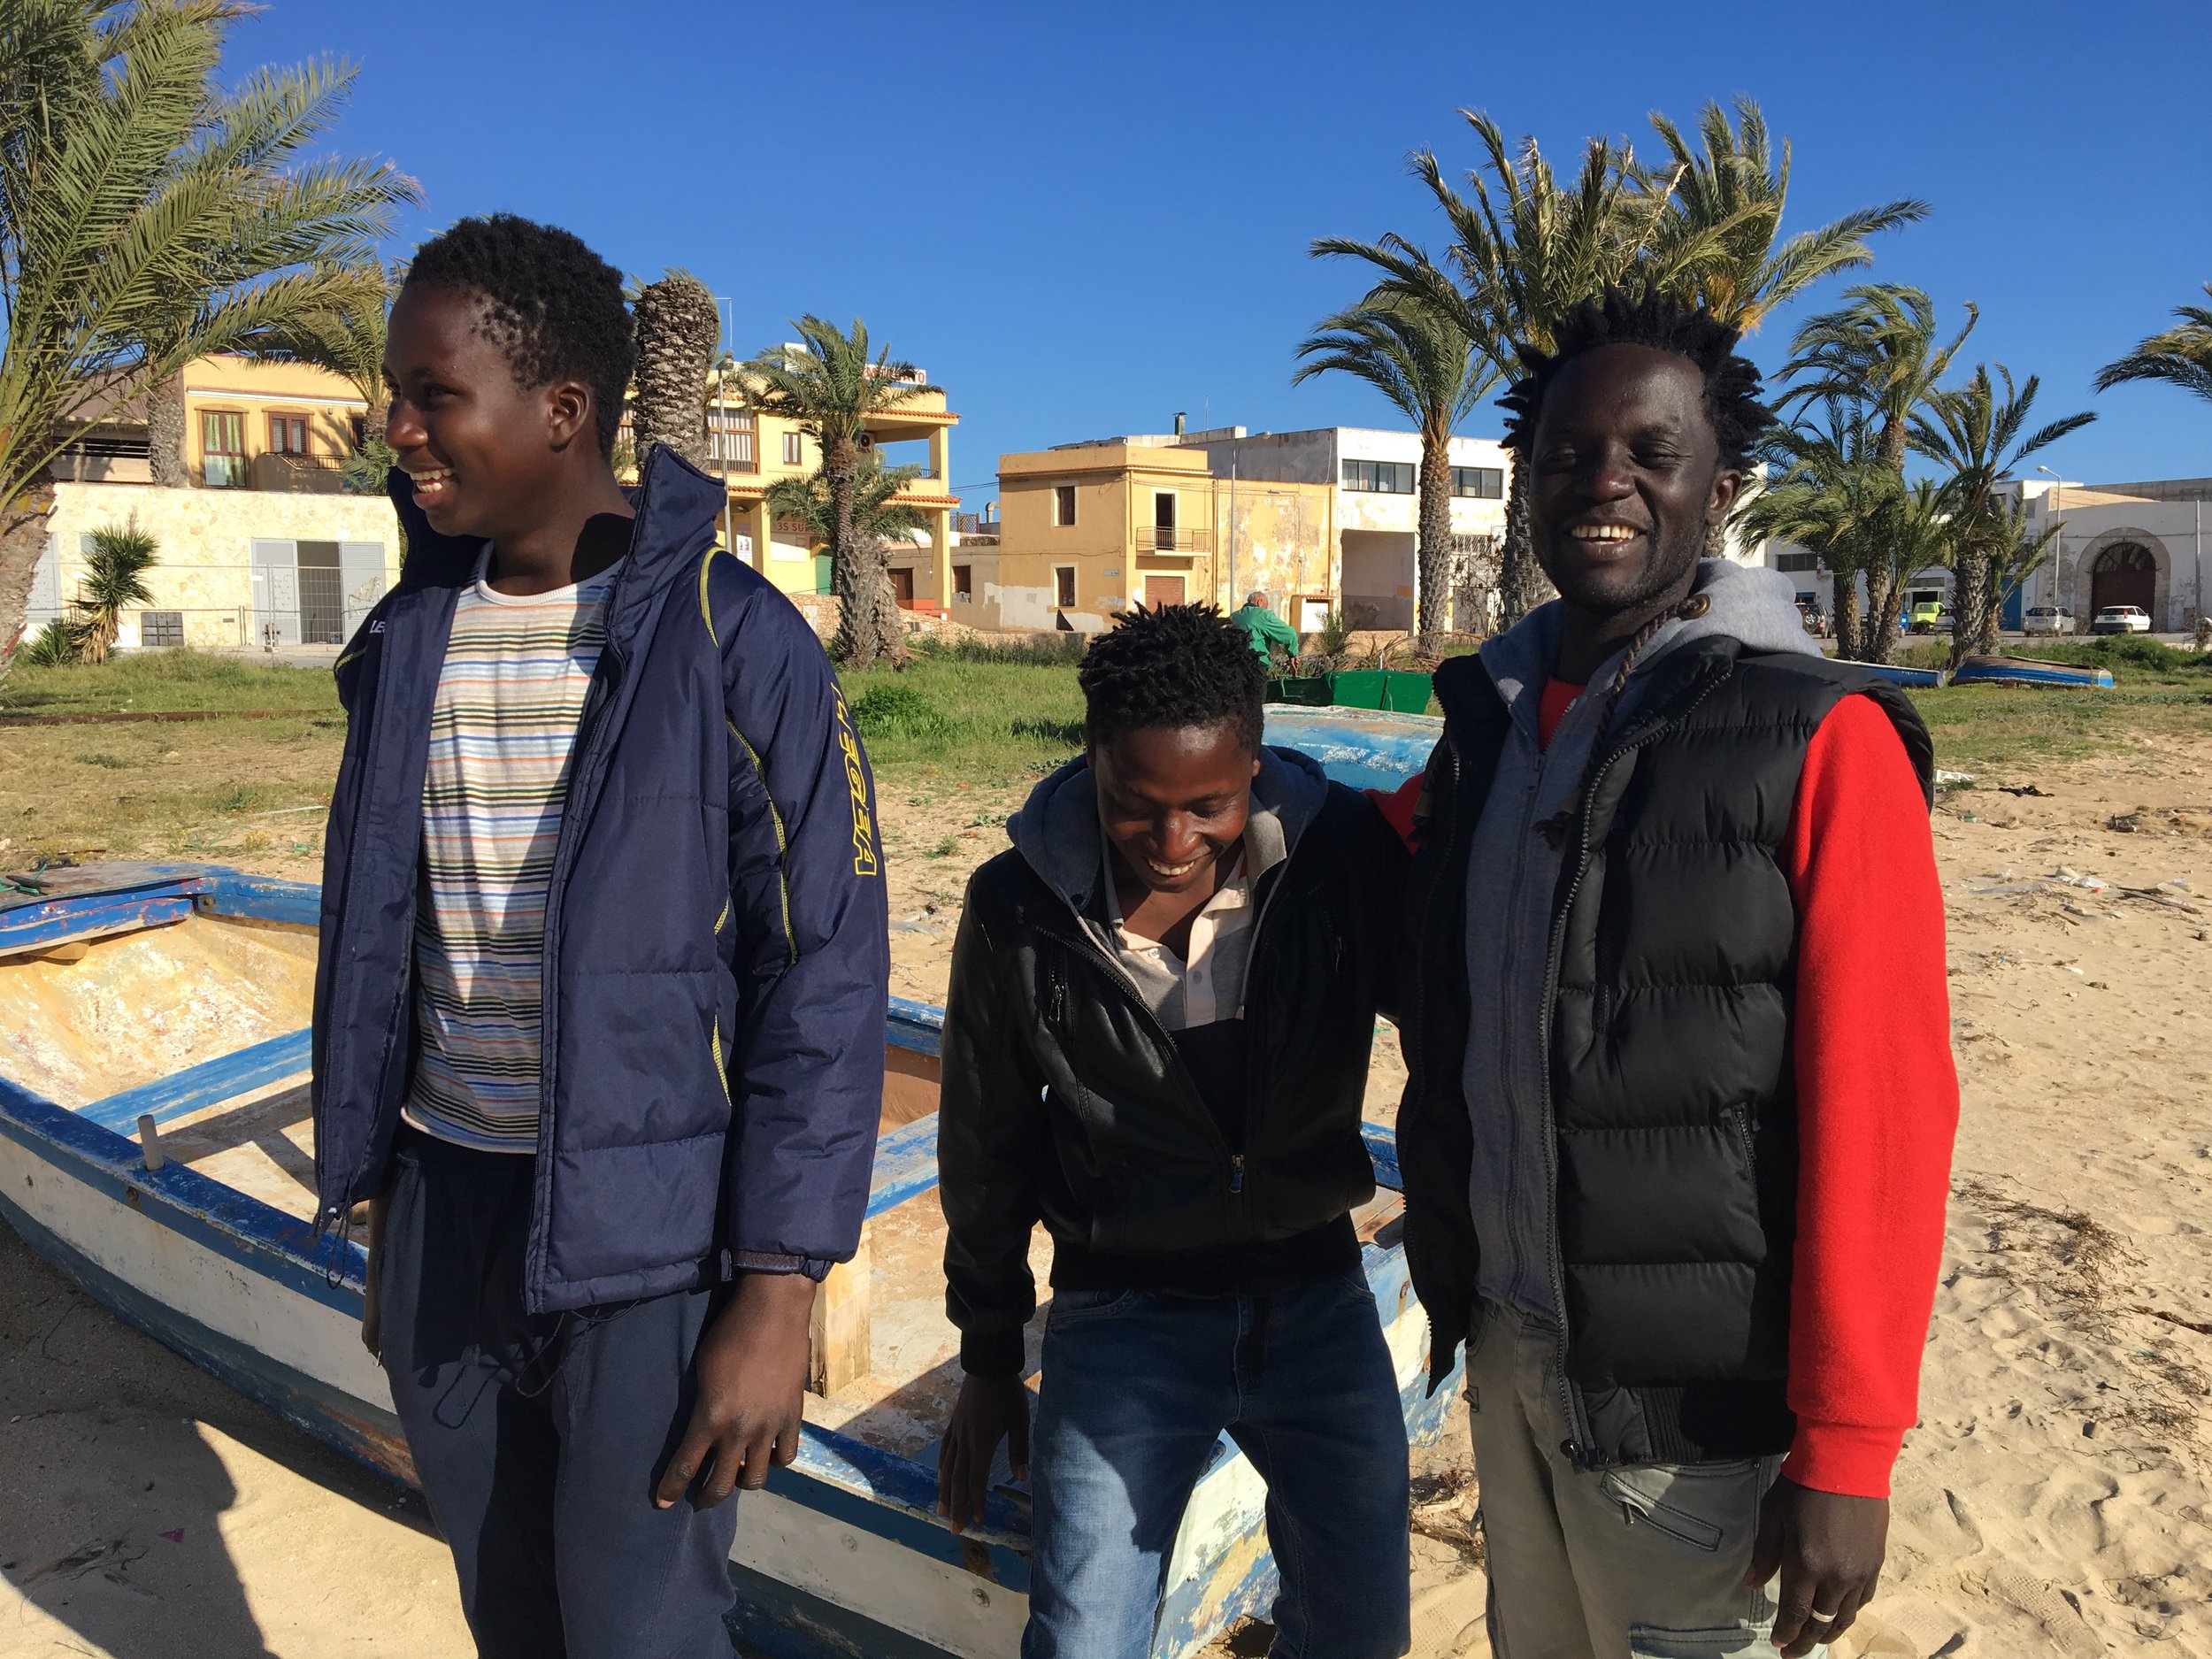   Ebrima (L) at Cala Palme; Lampedusa, Italy. 3 April 2017. © Pamela Kerpius  